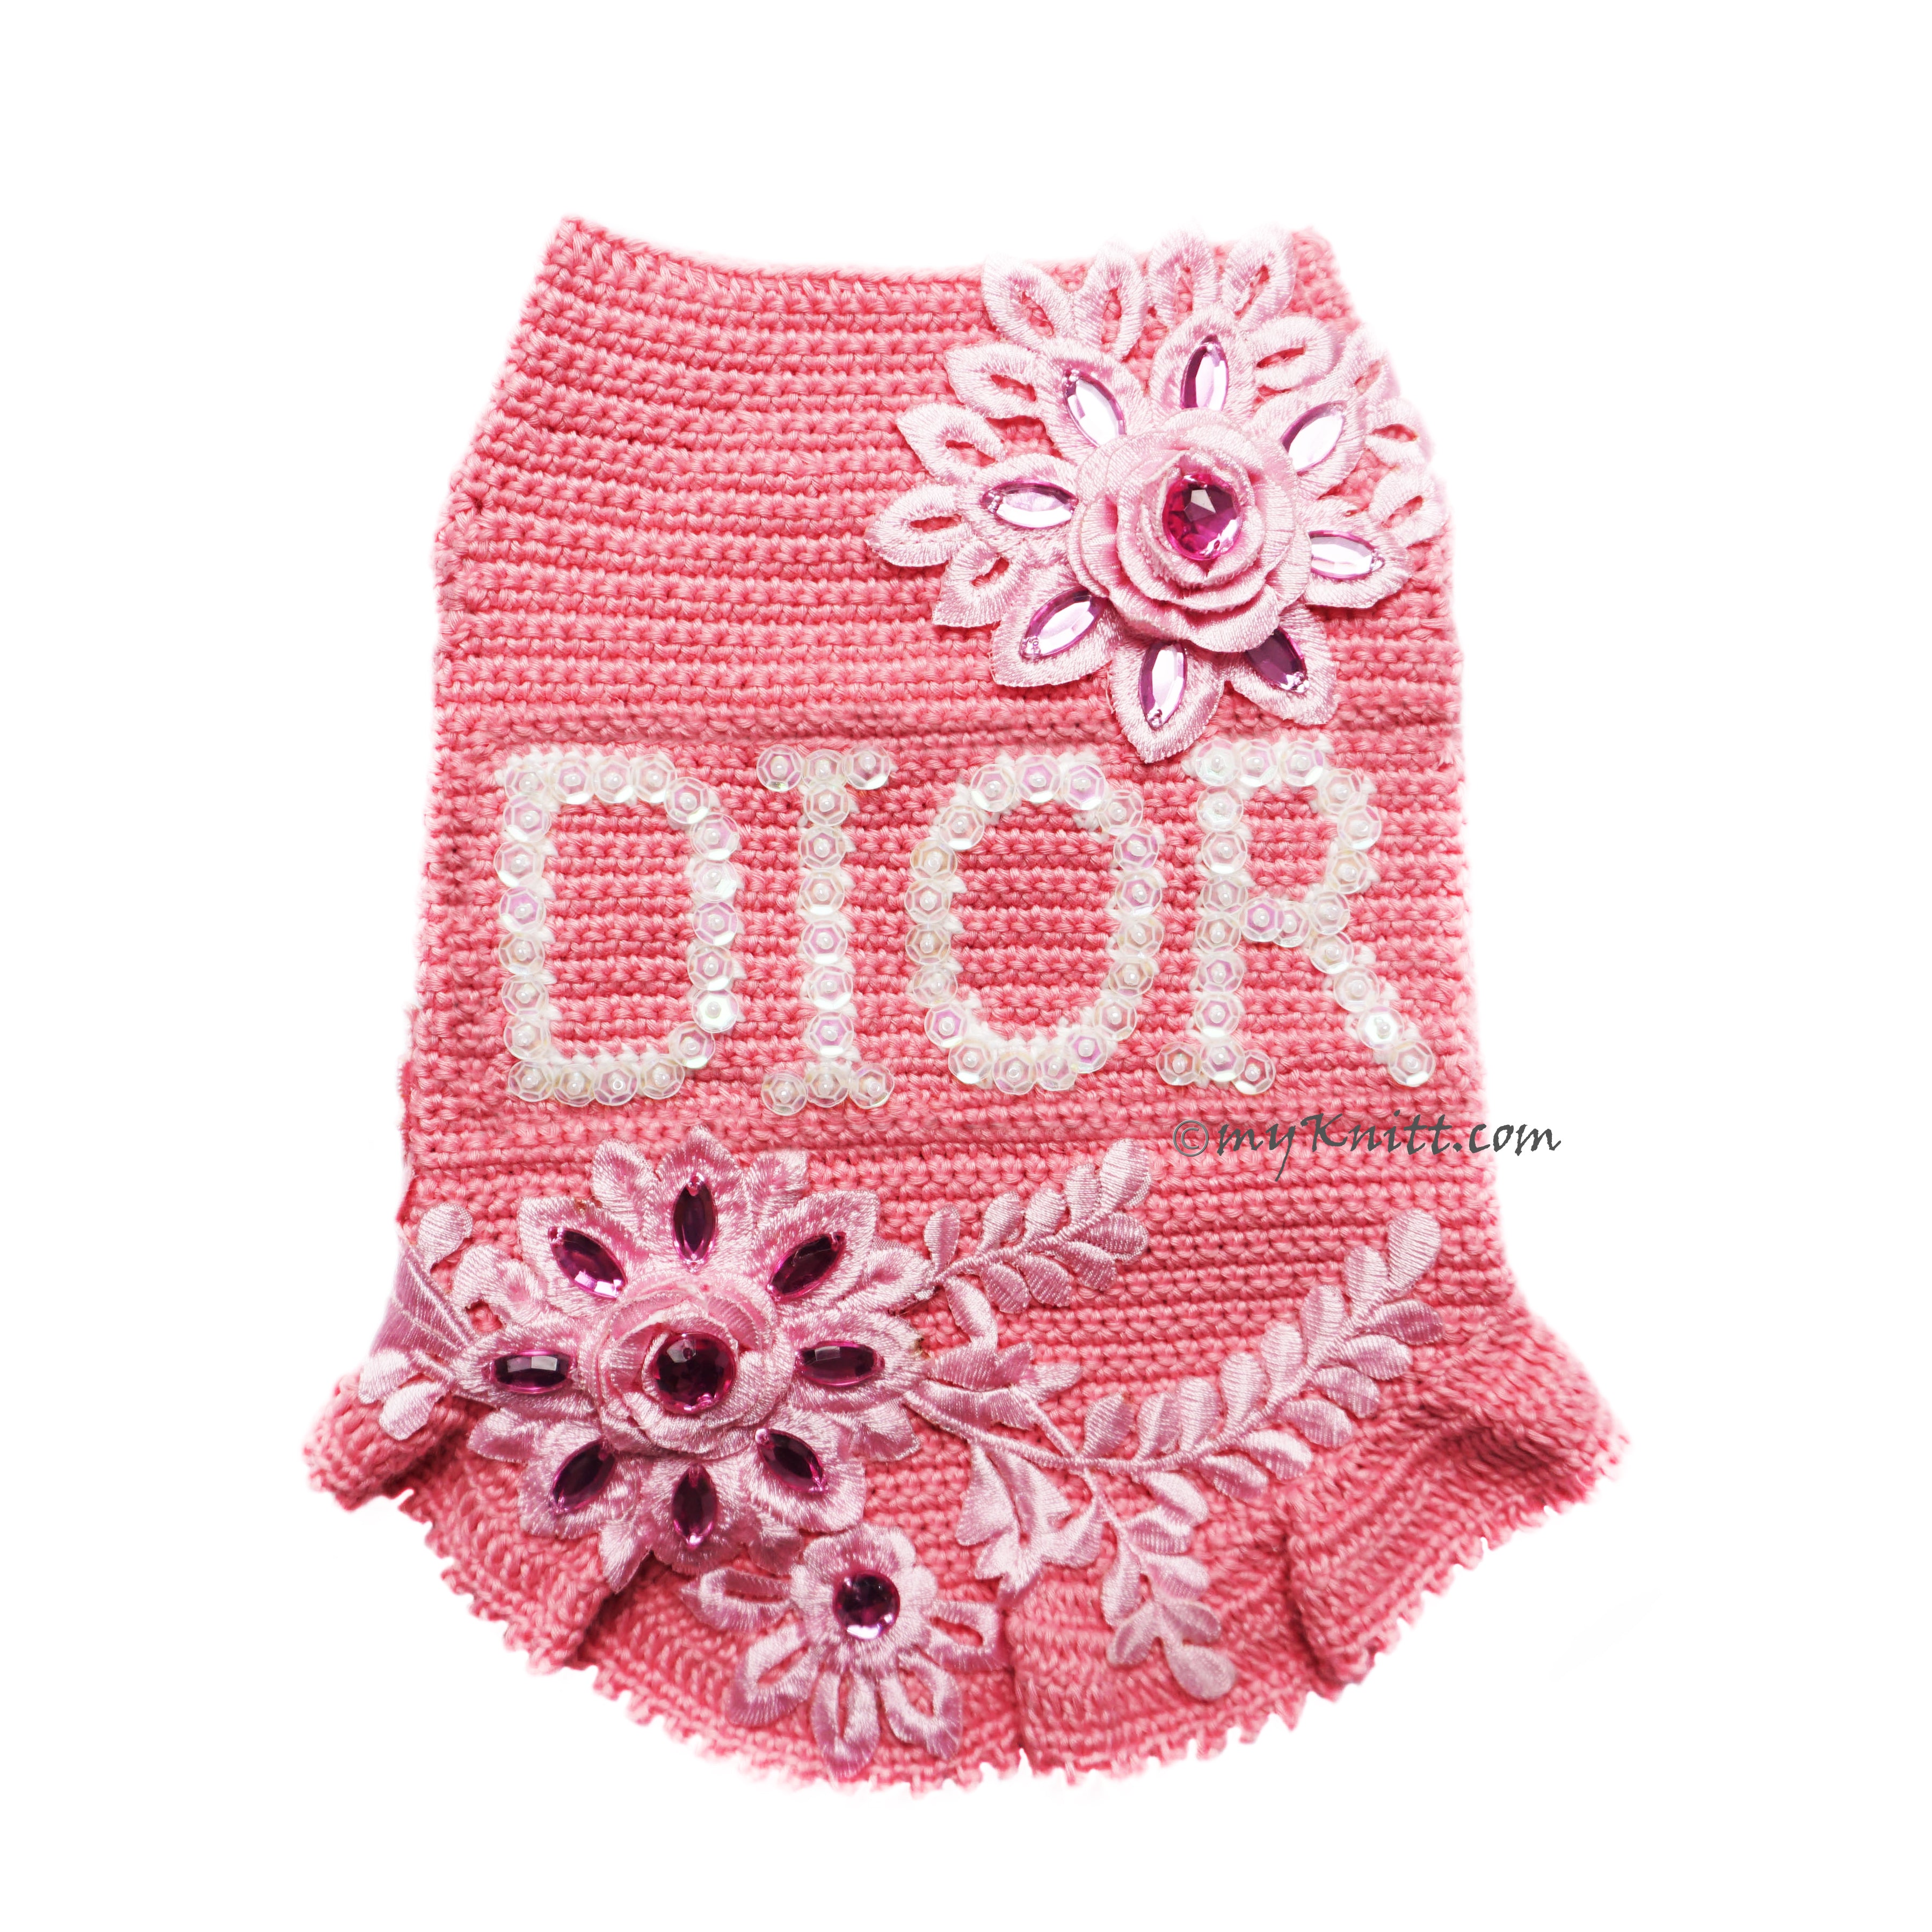 Pink Designer Dog Dress Crochet Flower Lace Crystal and Sequins DF303 Myknit